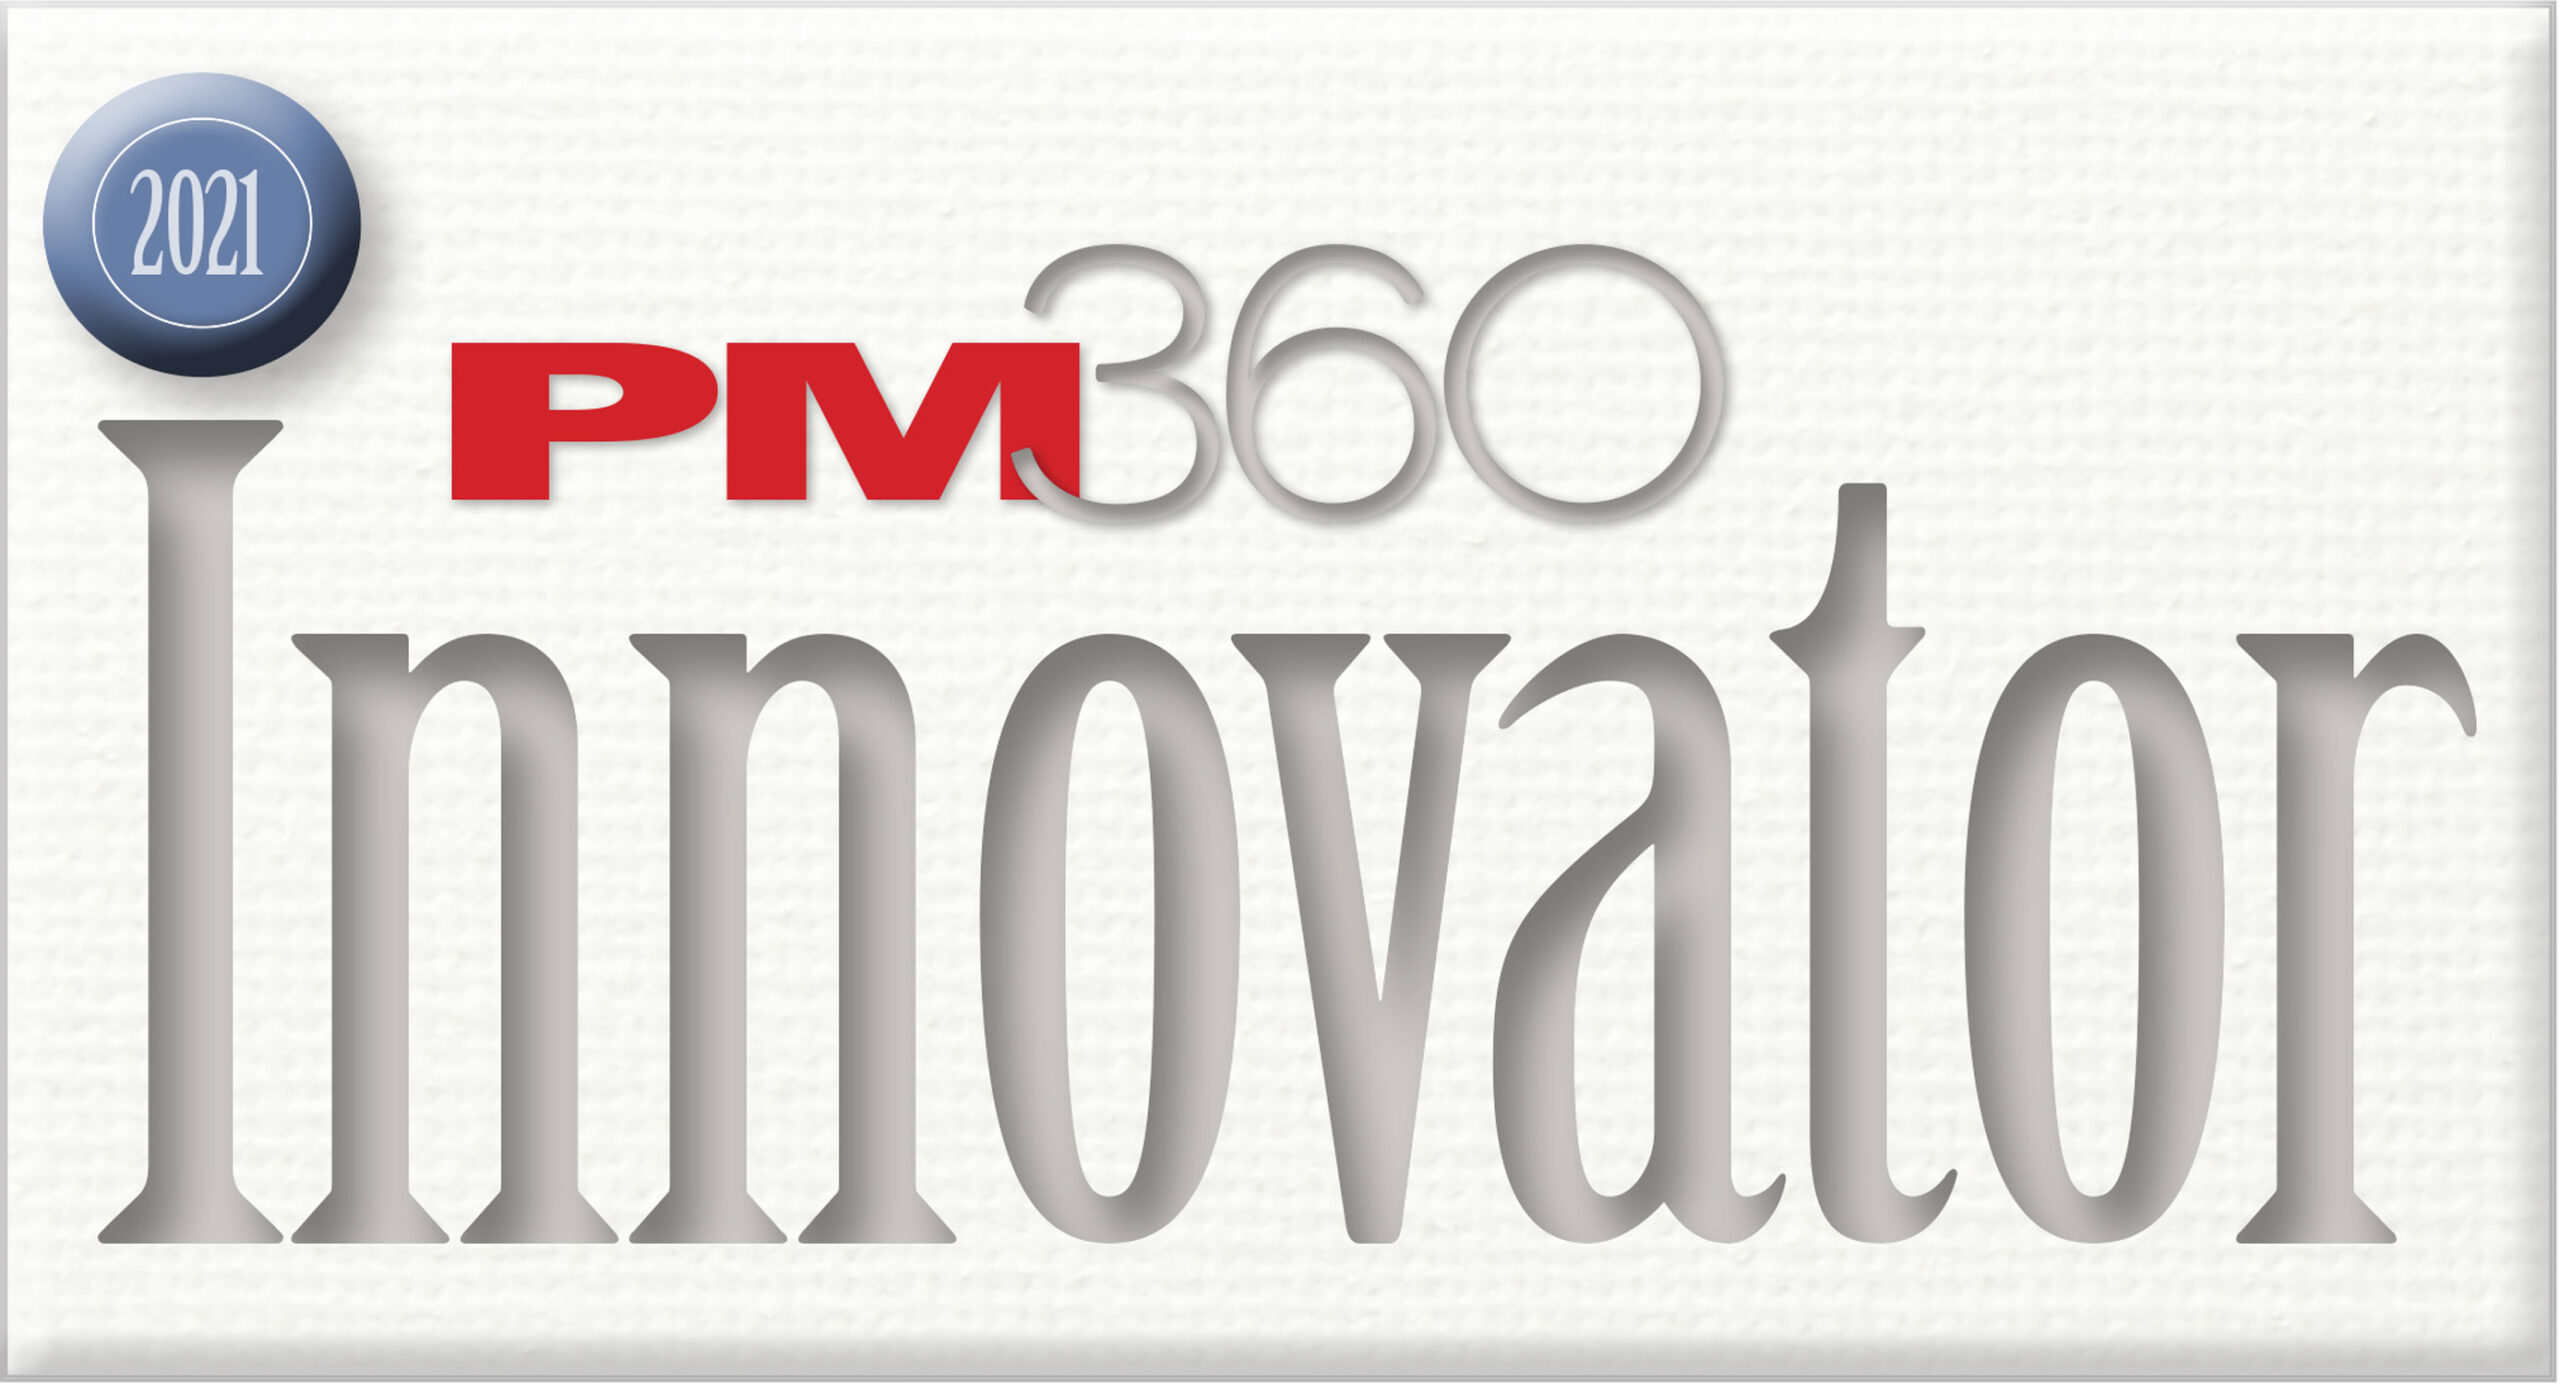 PM360 innovator logo